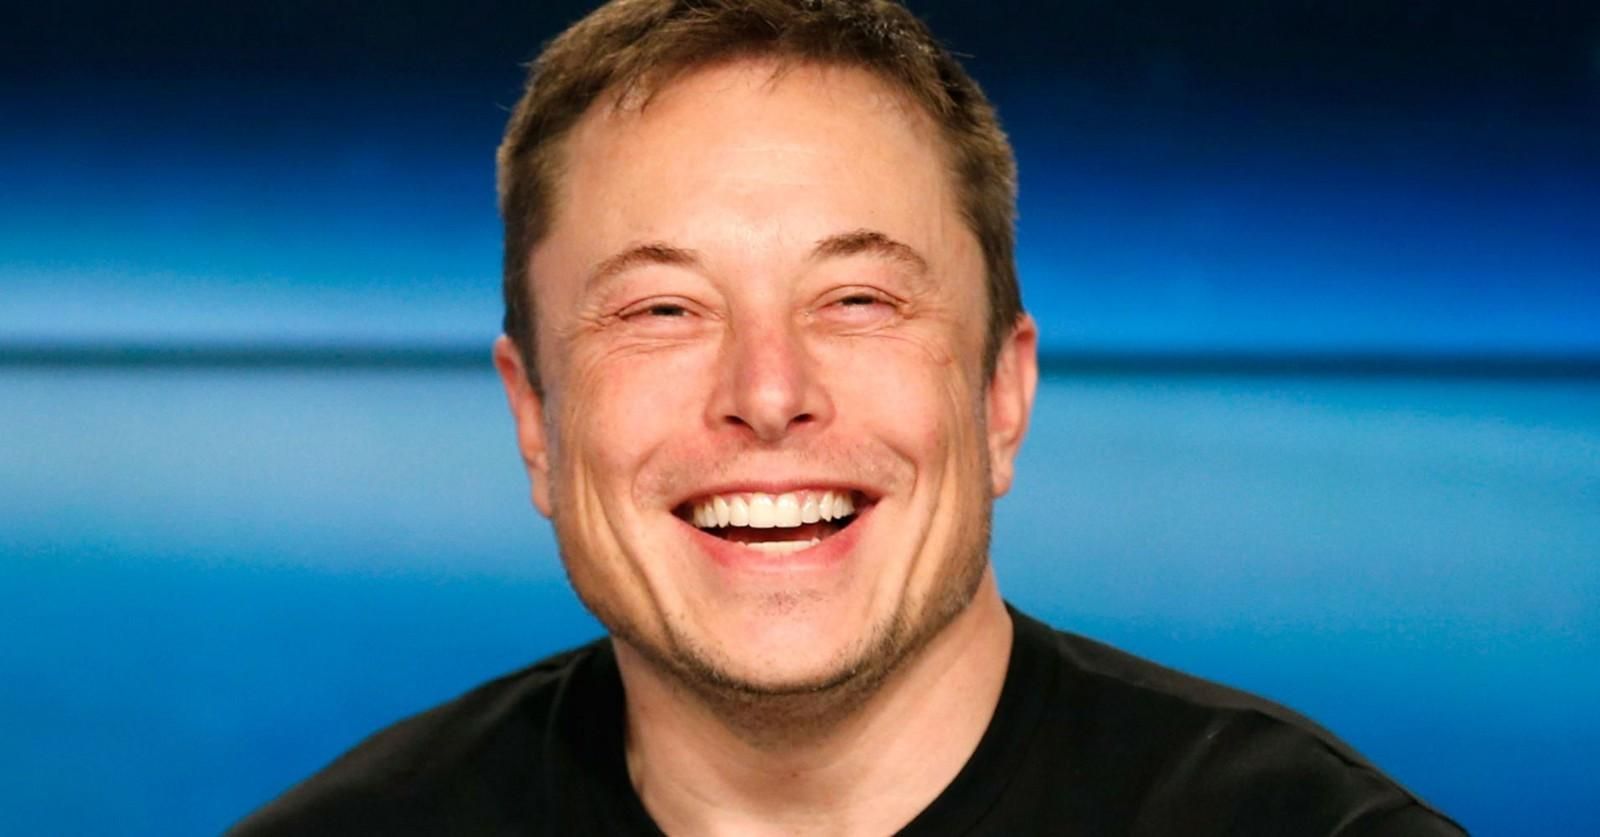 Билборд Kak tebe takoe, Elon Musk? в Калифорнии – фото дня